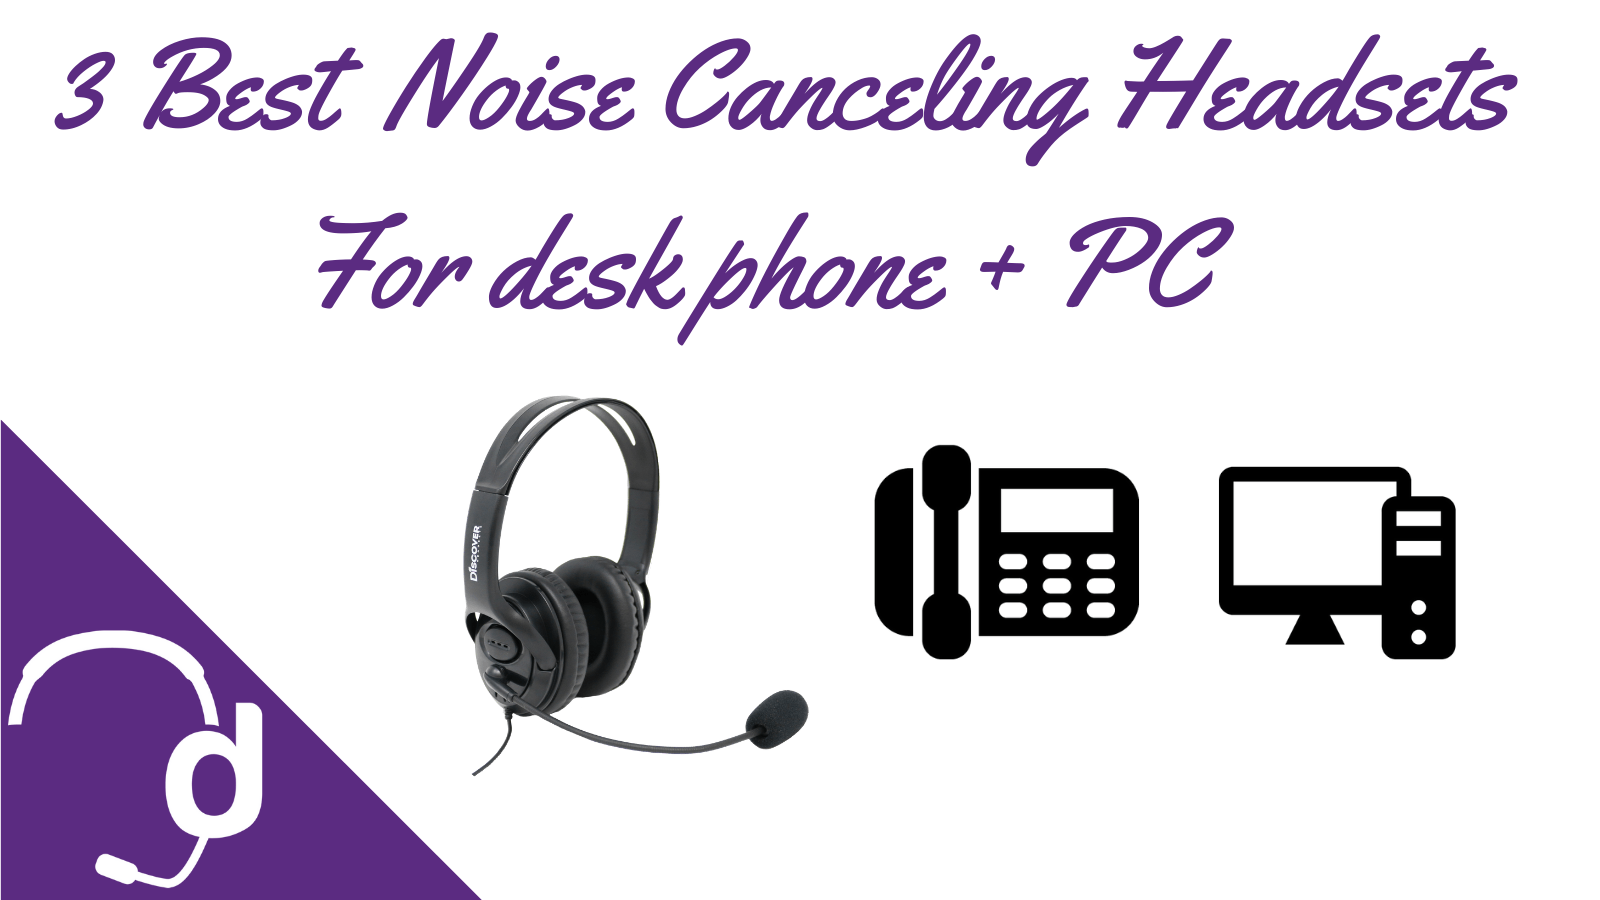 3 Best Noise Canceling Headsets For Call Centers Using Desk Phones + Computer - Headset Advisor